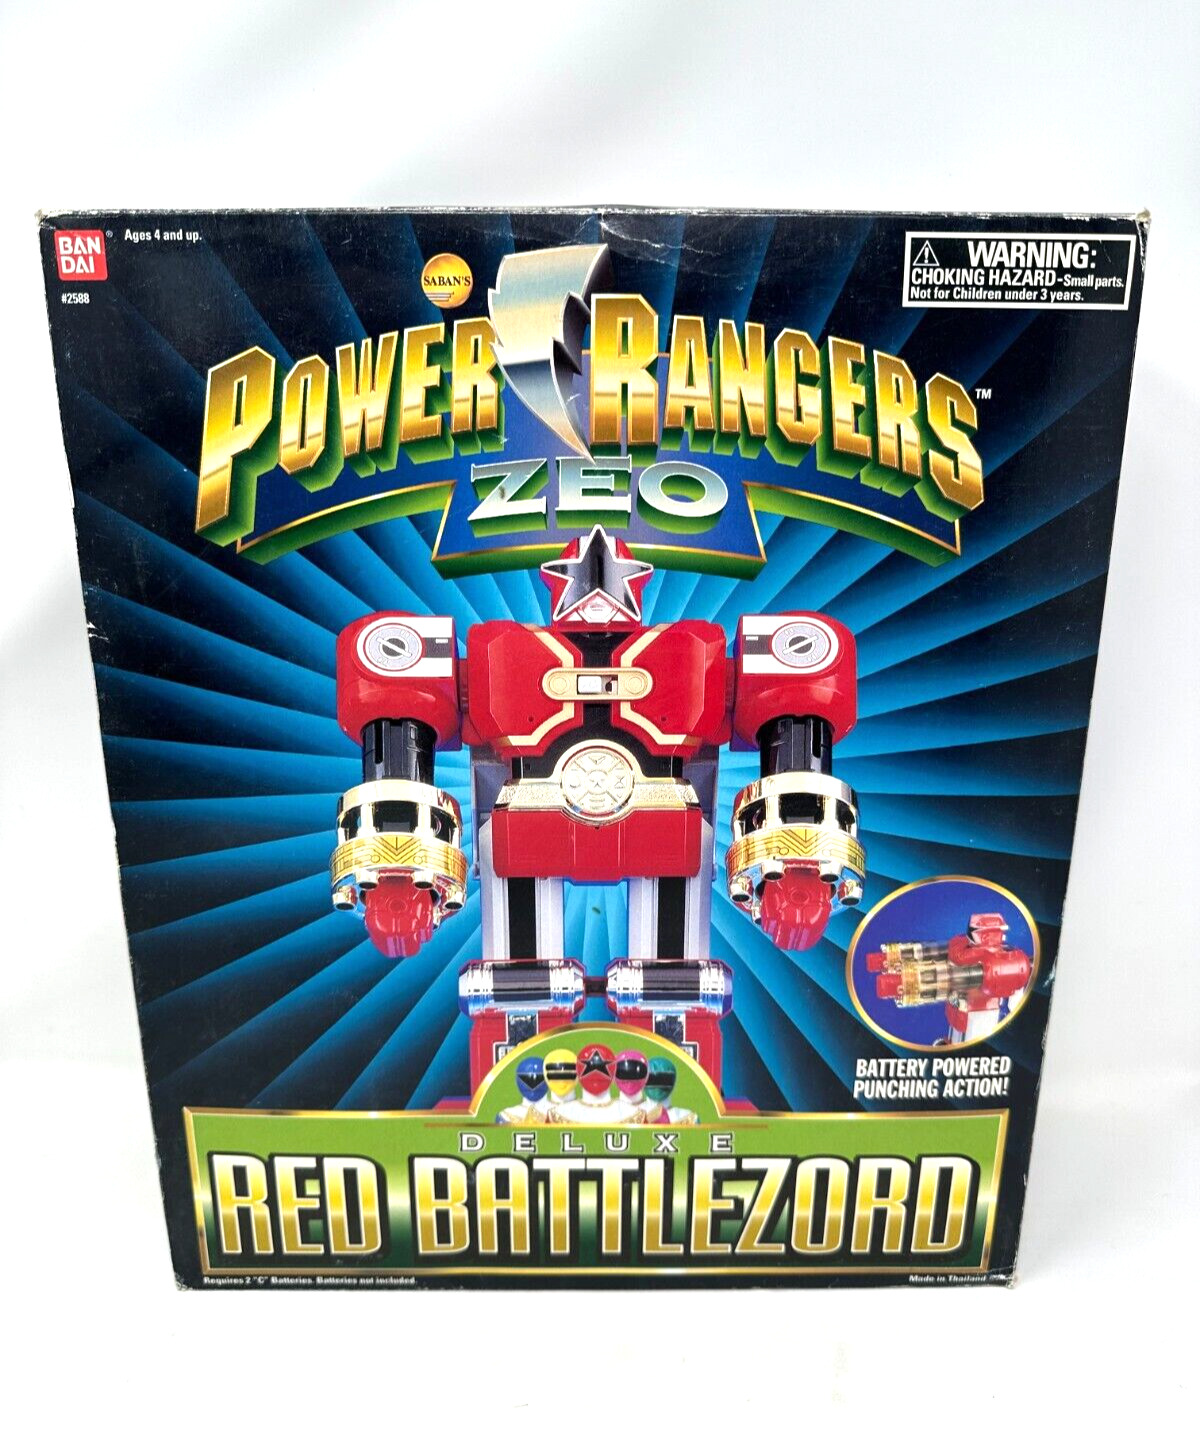 Power Rangers Zeo Deluxe Red Battlezord Bandai 1996 Box Vintage #2588